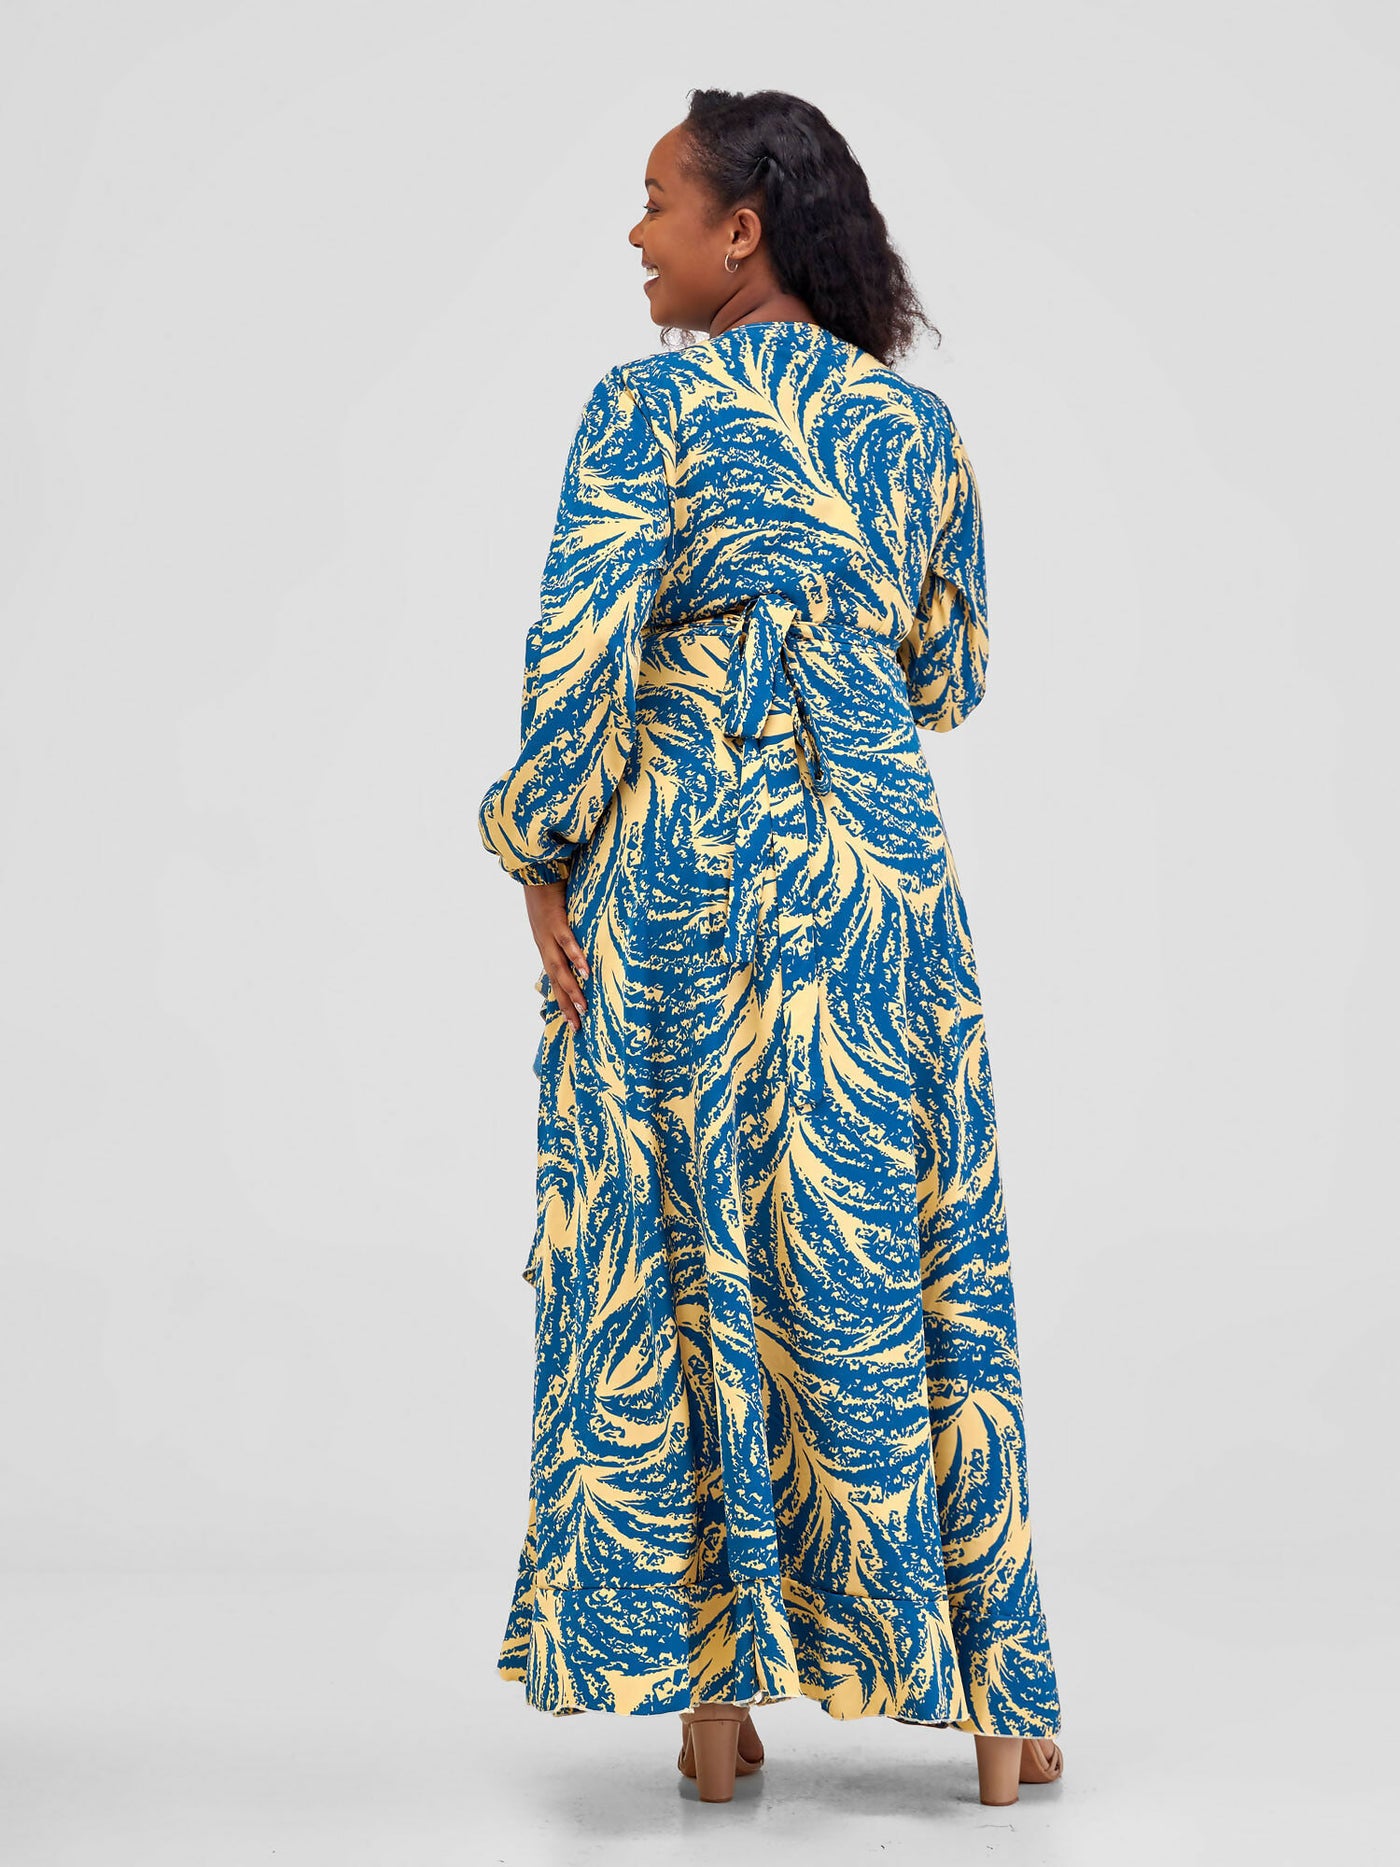 Salok Havilah Wear Kyra Wrap Dress - Blue / Yellow Print